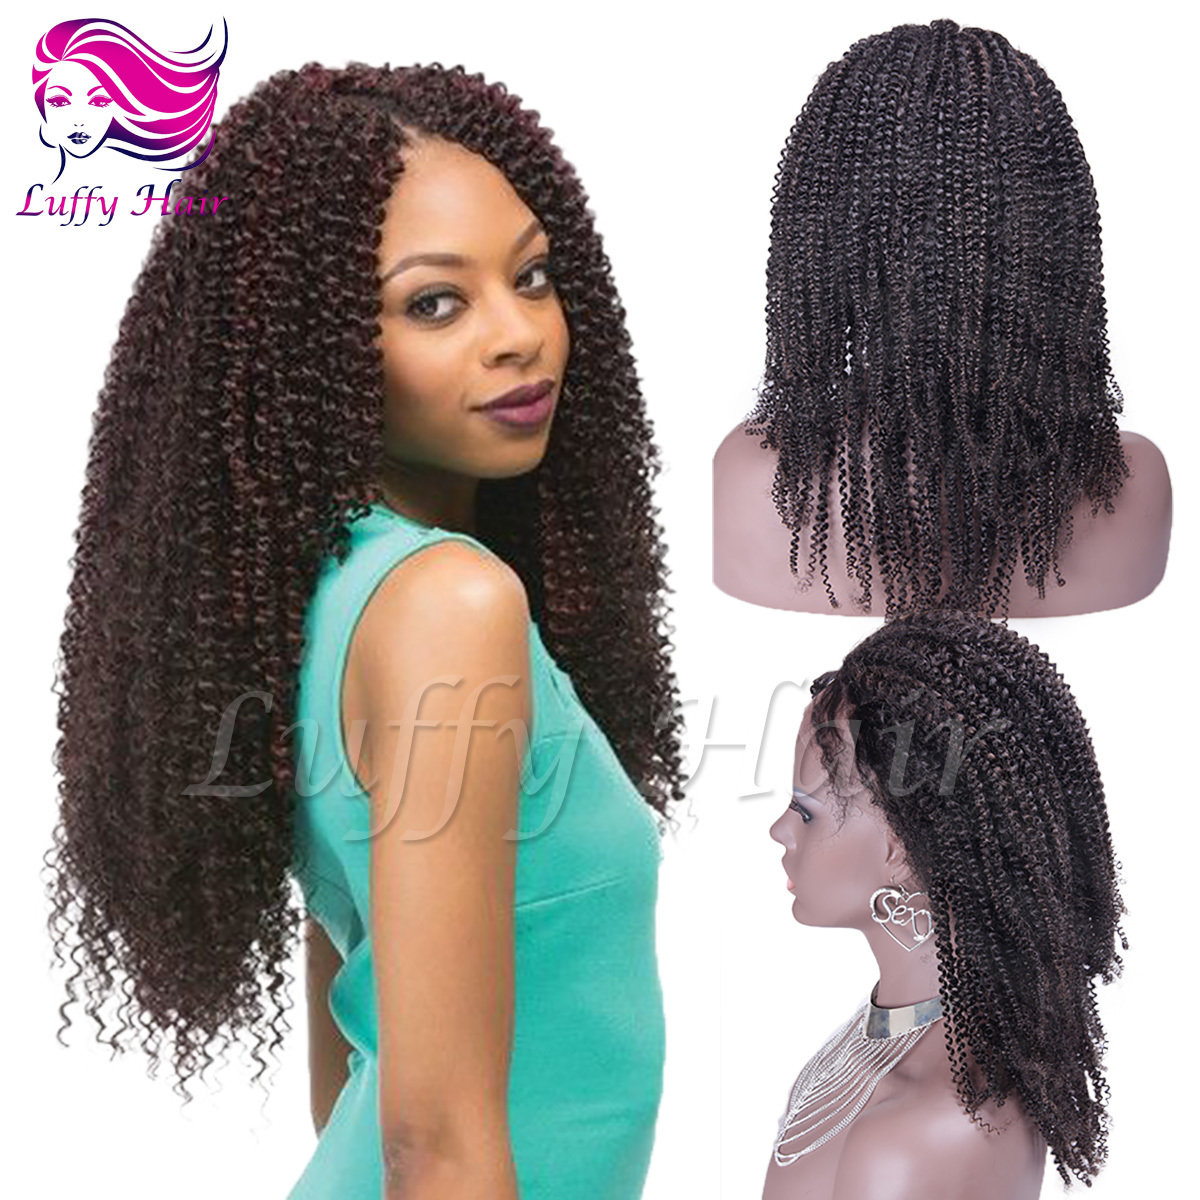 8A Virgin Human Hair Afro Kinky Curly Wig - KWL010